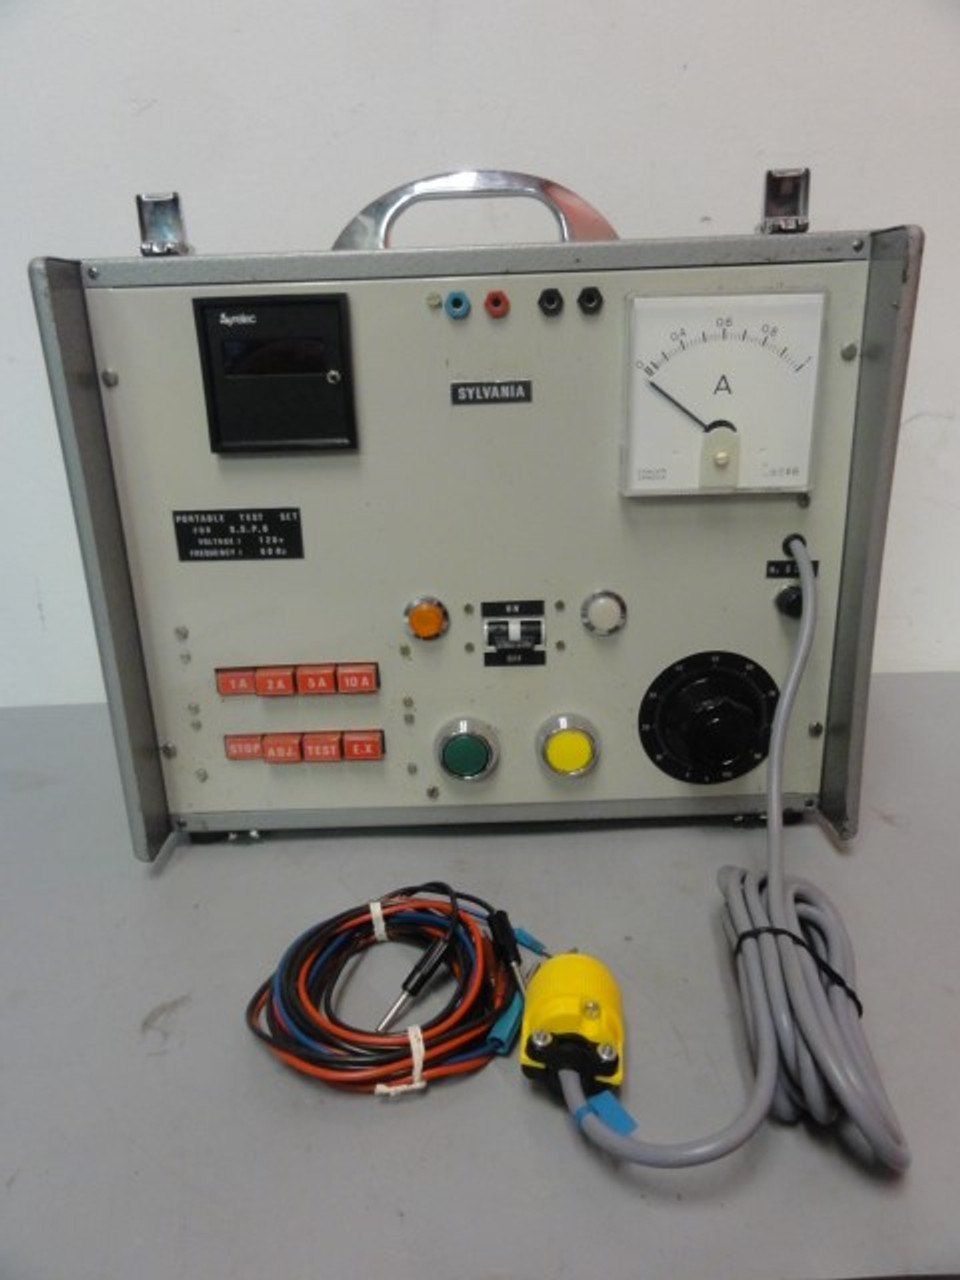 Sylvania Portable Test Set, Voltage: 120V, Frequency 60Hz